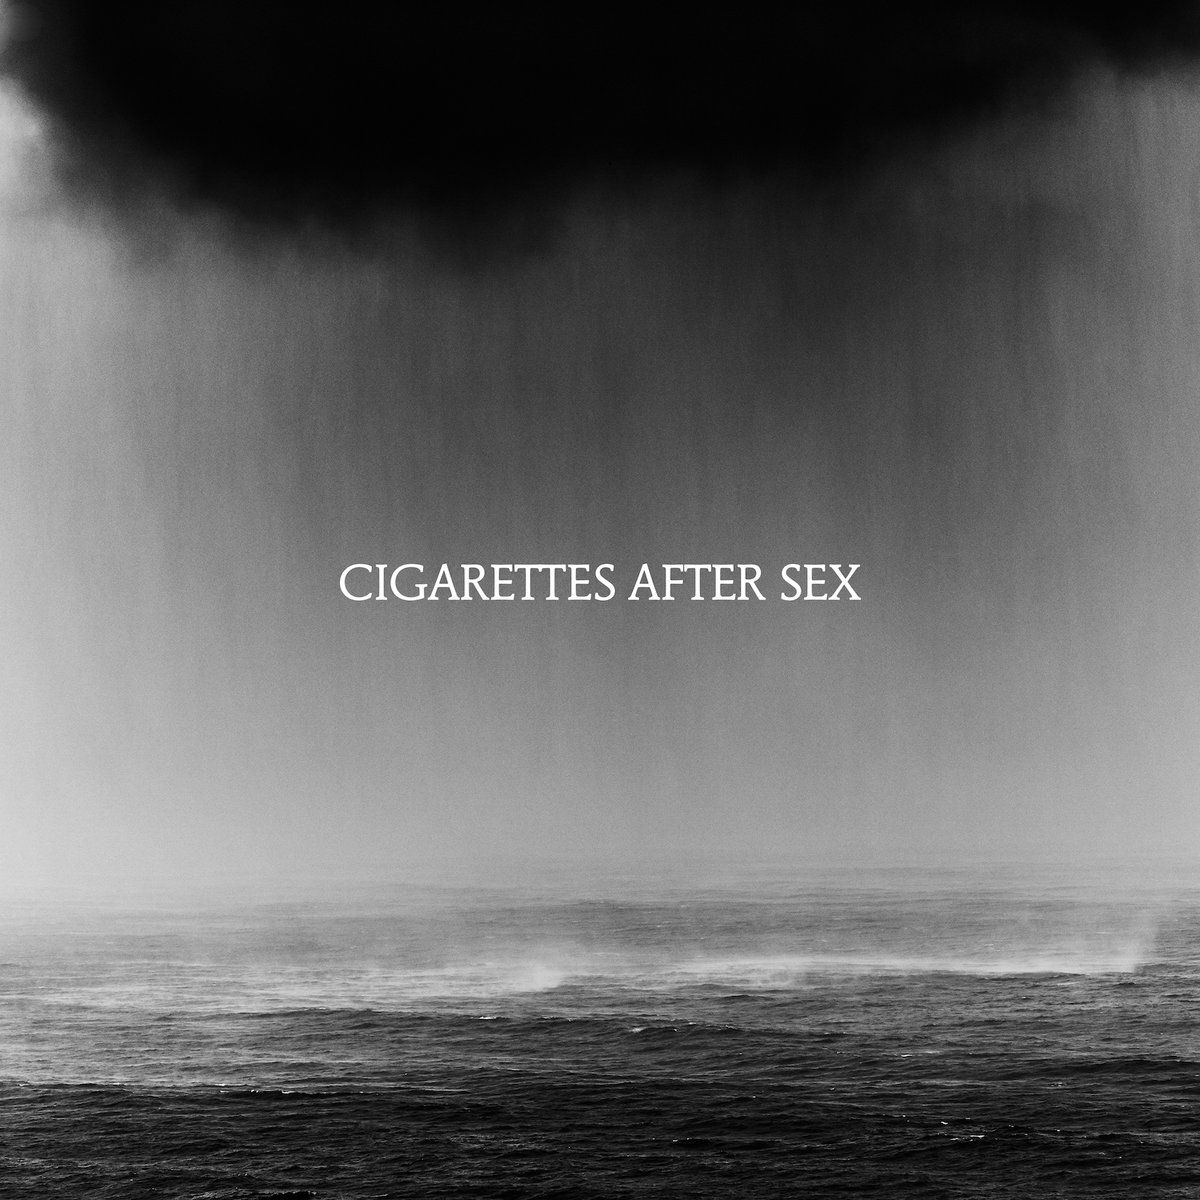 Cigarettes After Sex release a shallow, stagnant LP